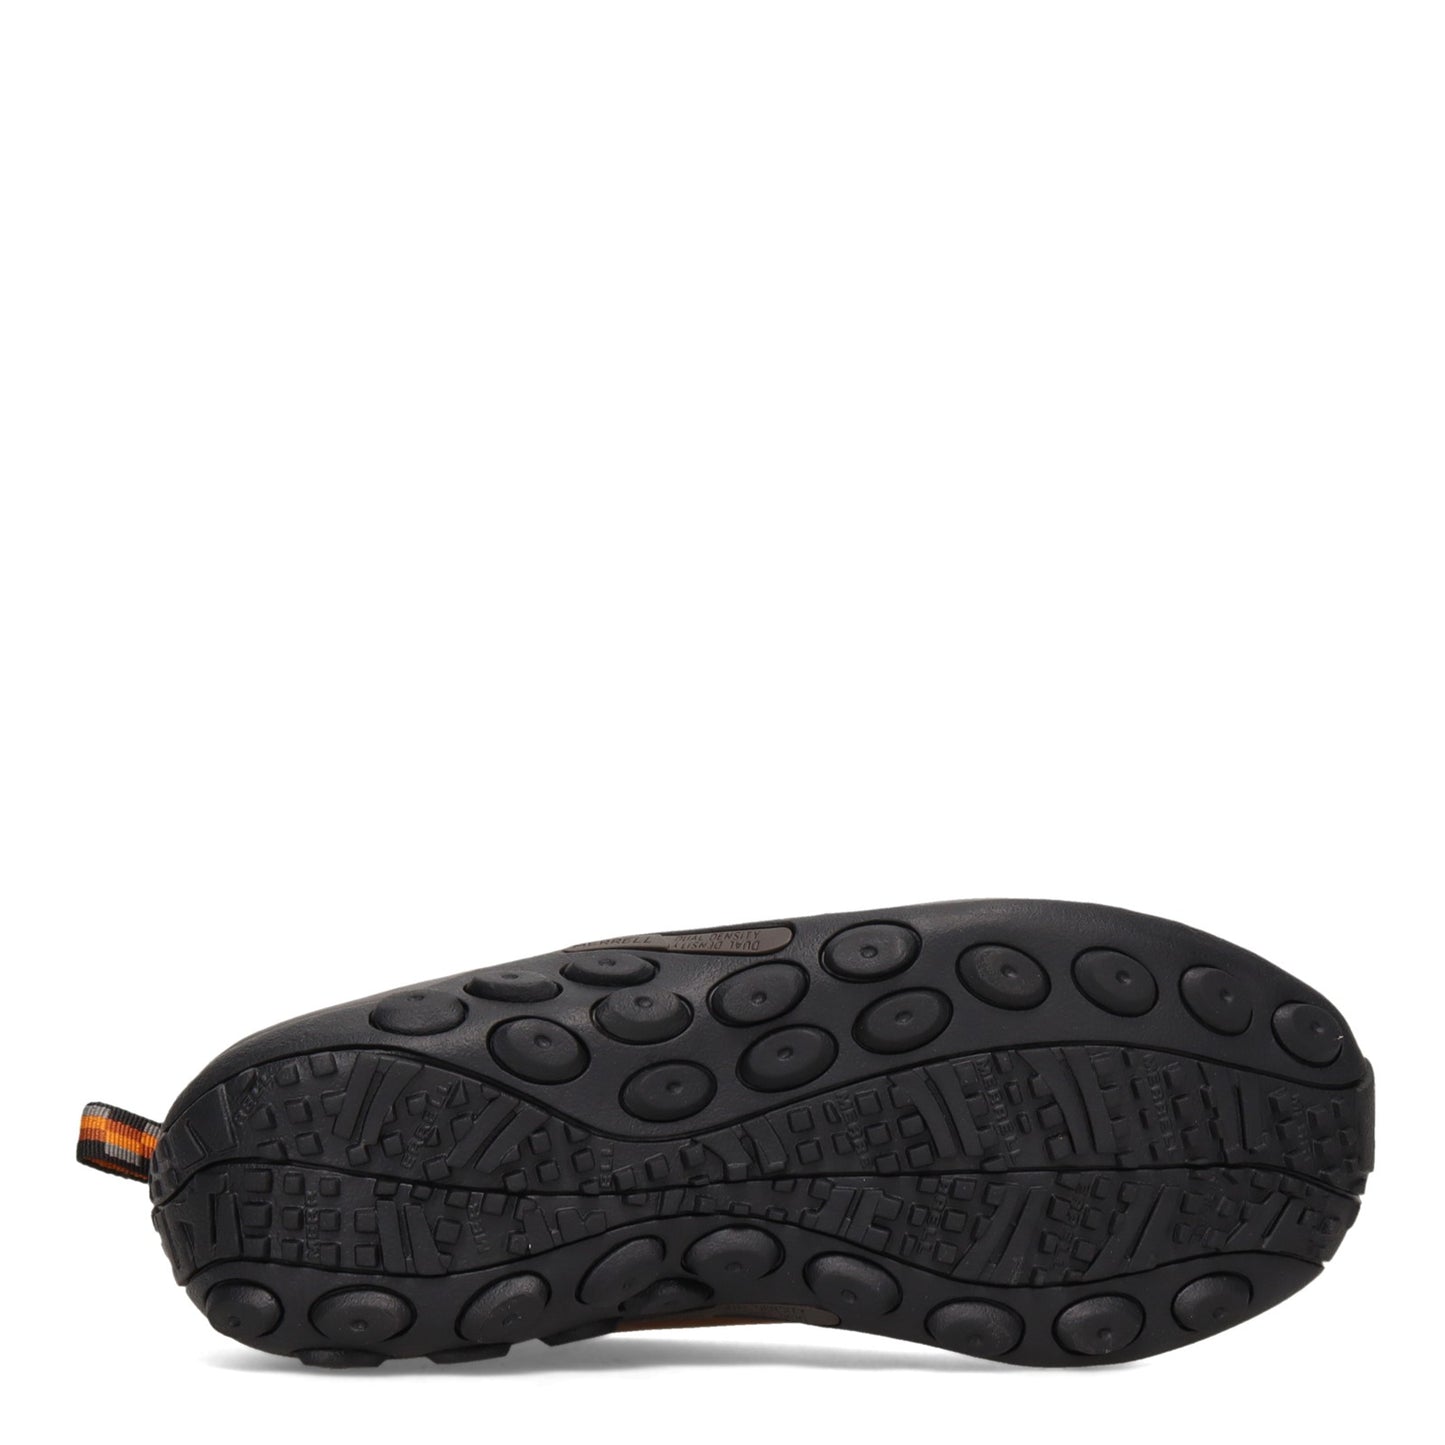 Peltz Shoes  Men's Merrell Jungle Moc Waterproof Slip-On BROWN NUBUCK J52927